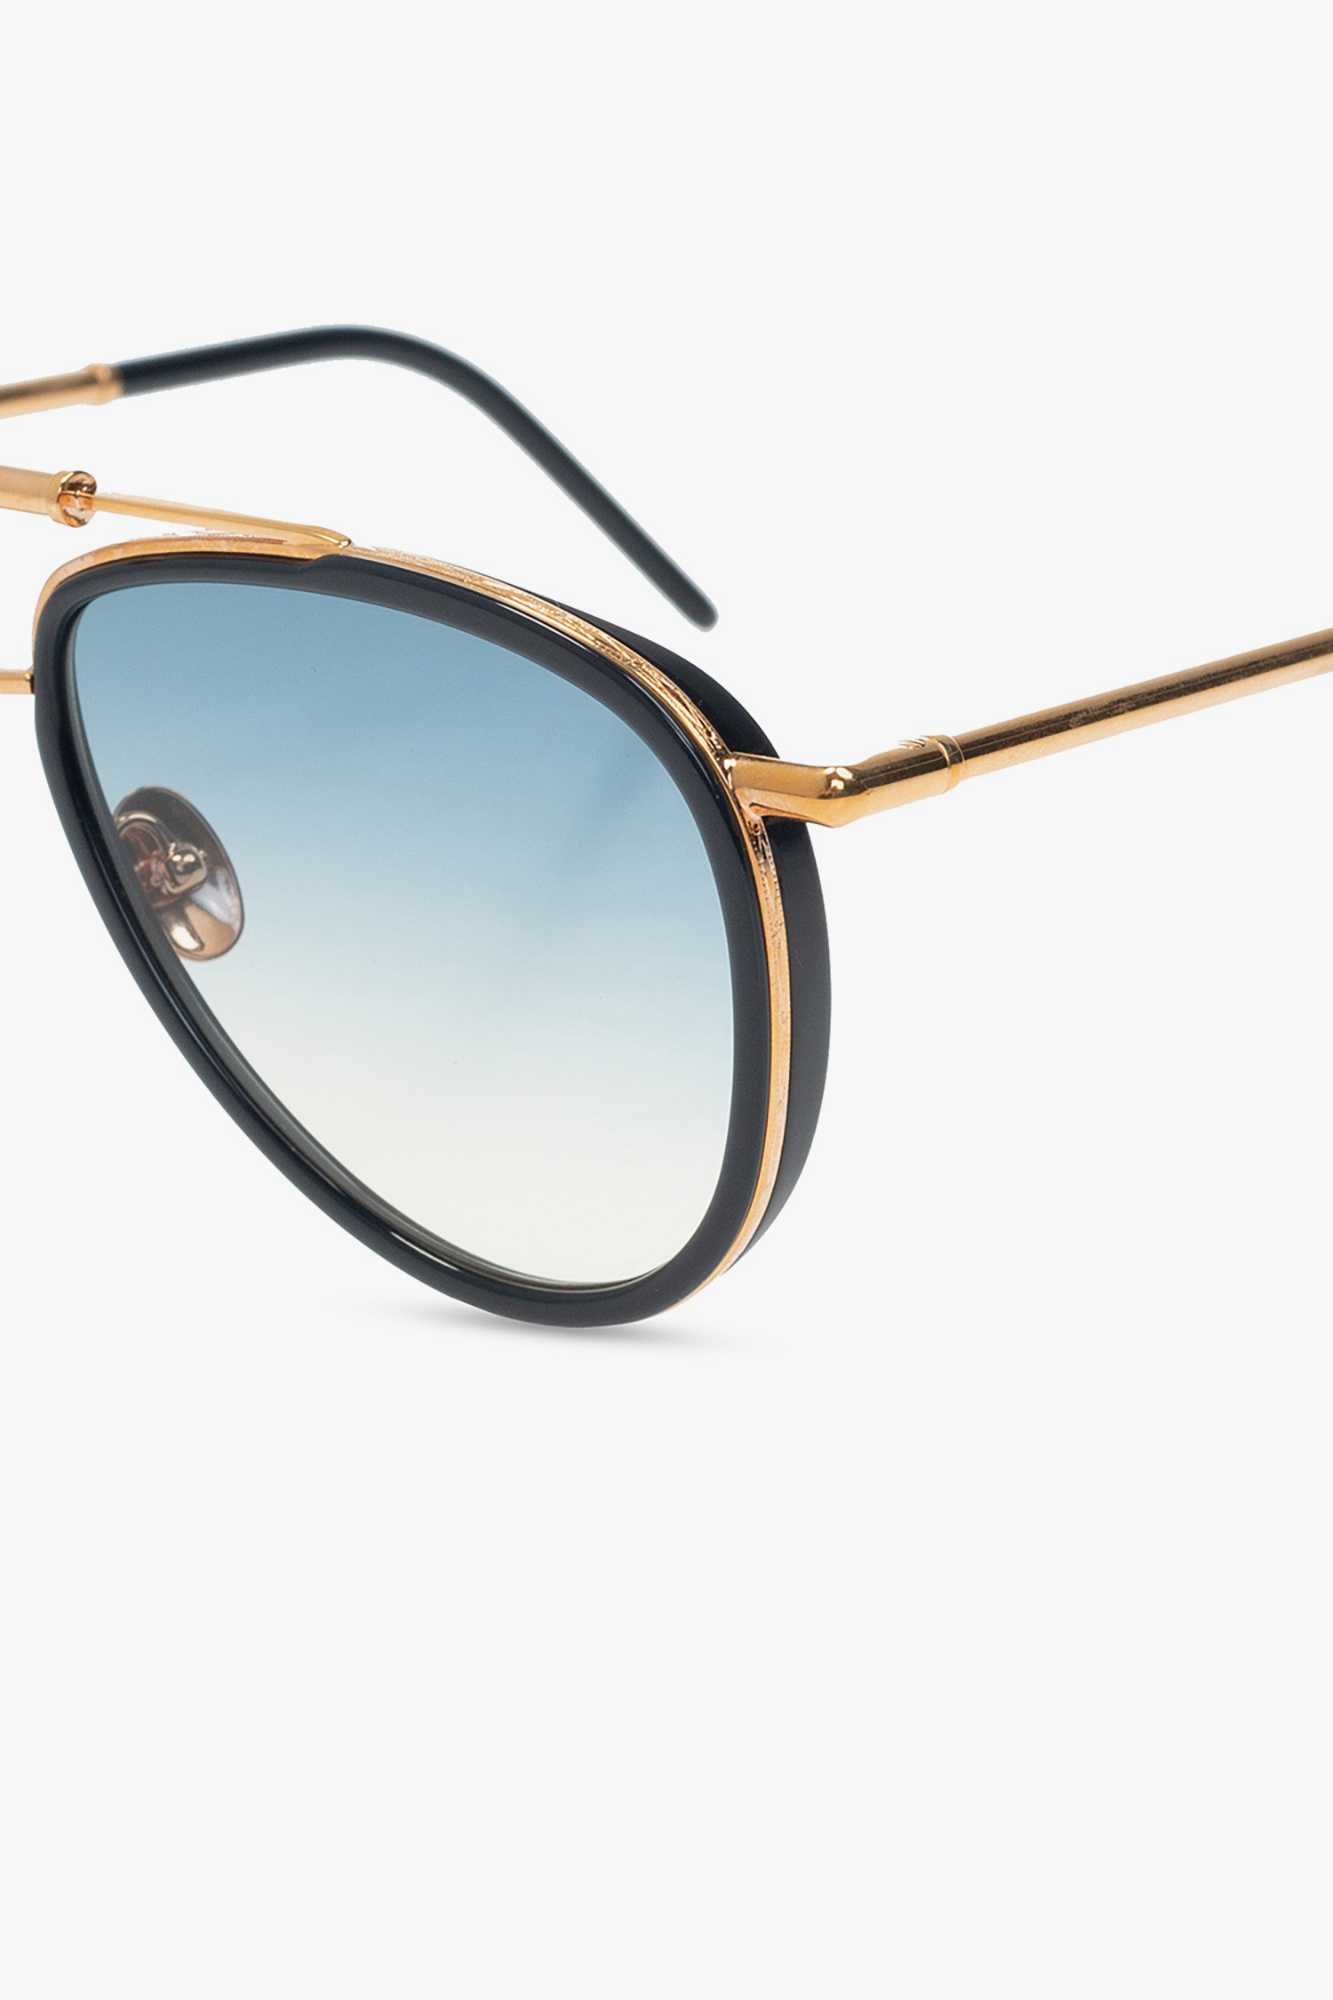 John Dalia ‘Barry’ Gabbana sunglasses